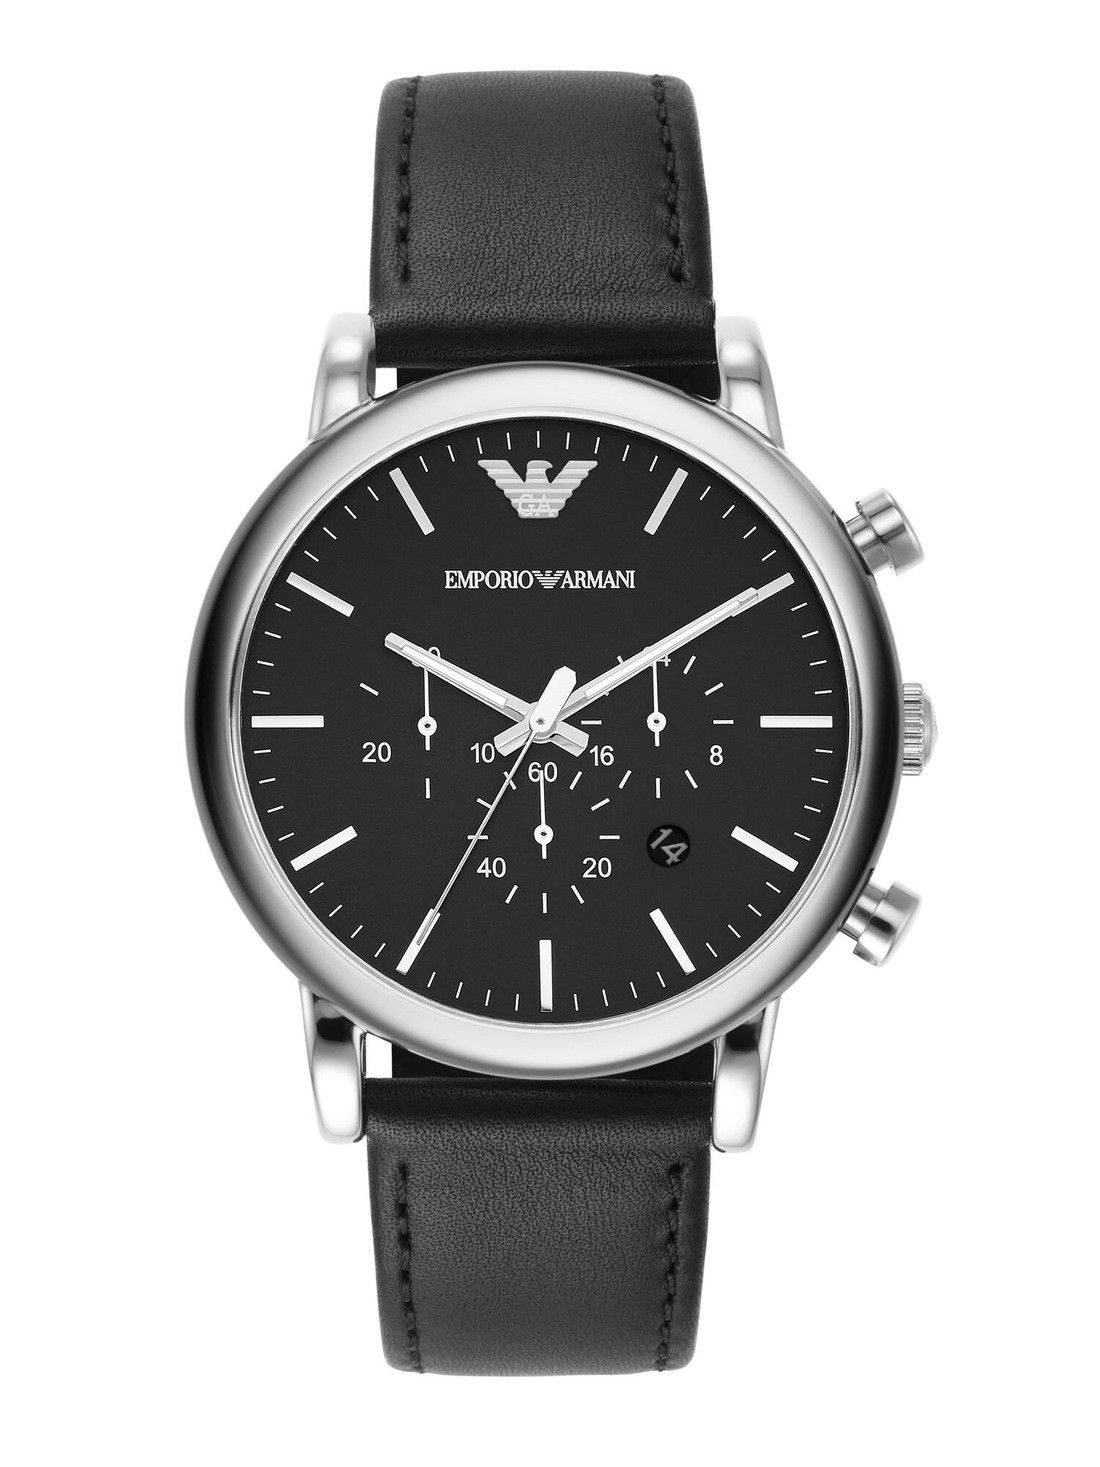 Emporio Armani Black Watch AR1828 - Watch Station India